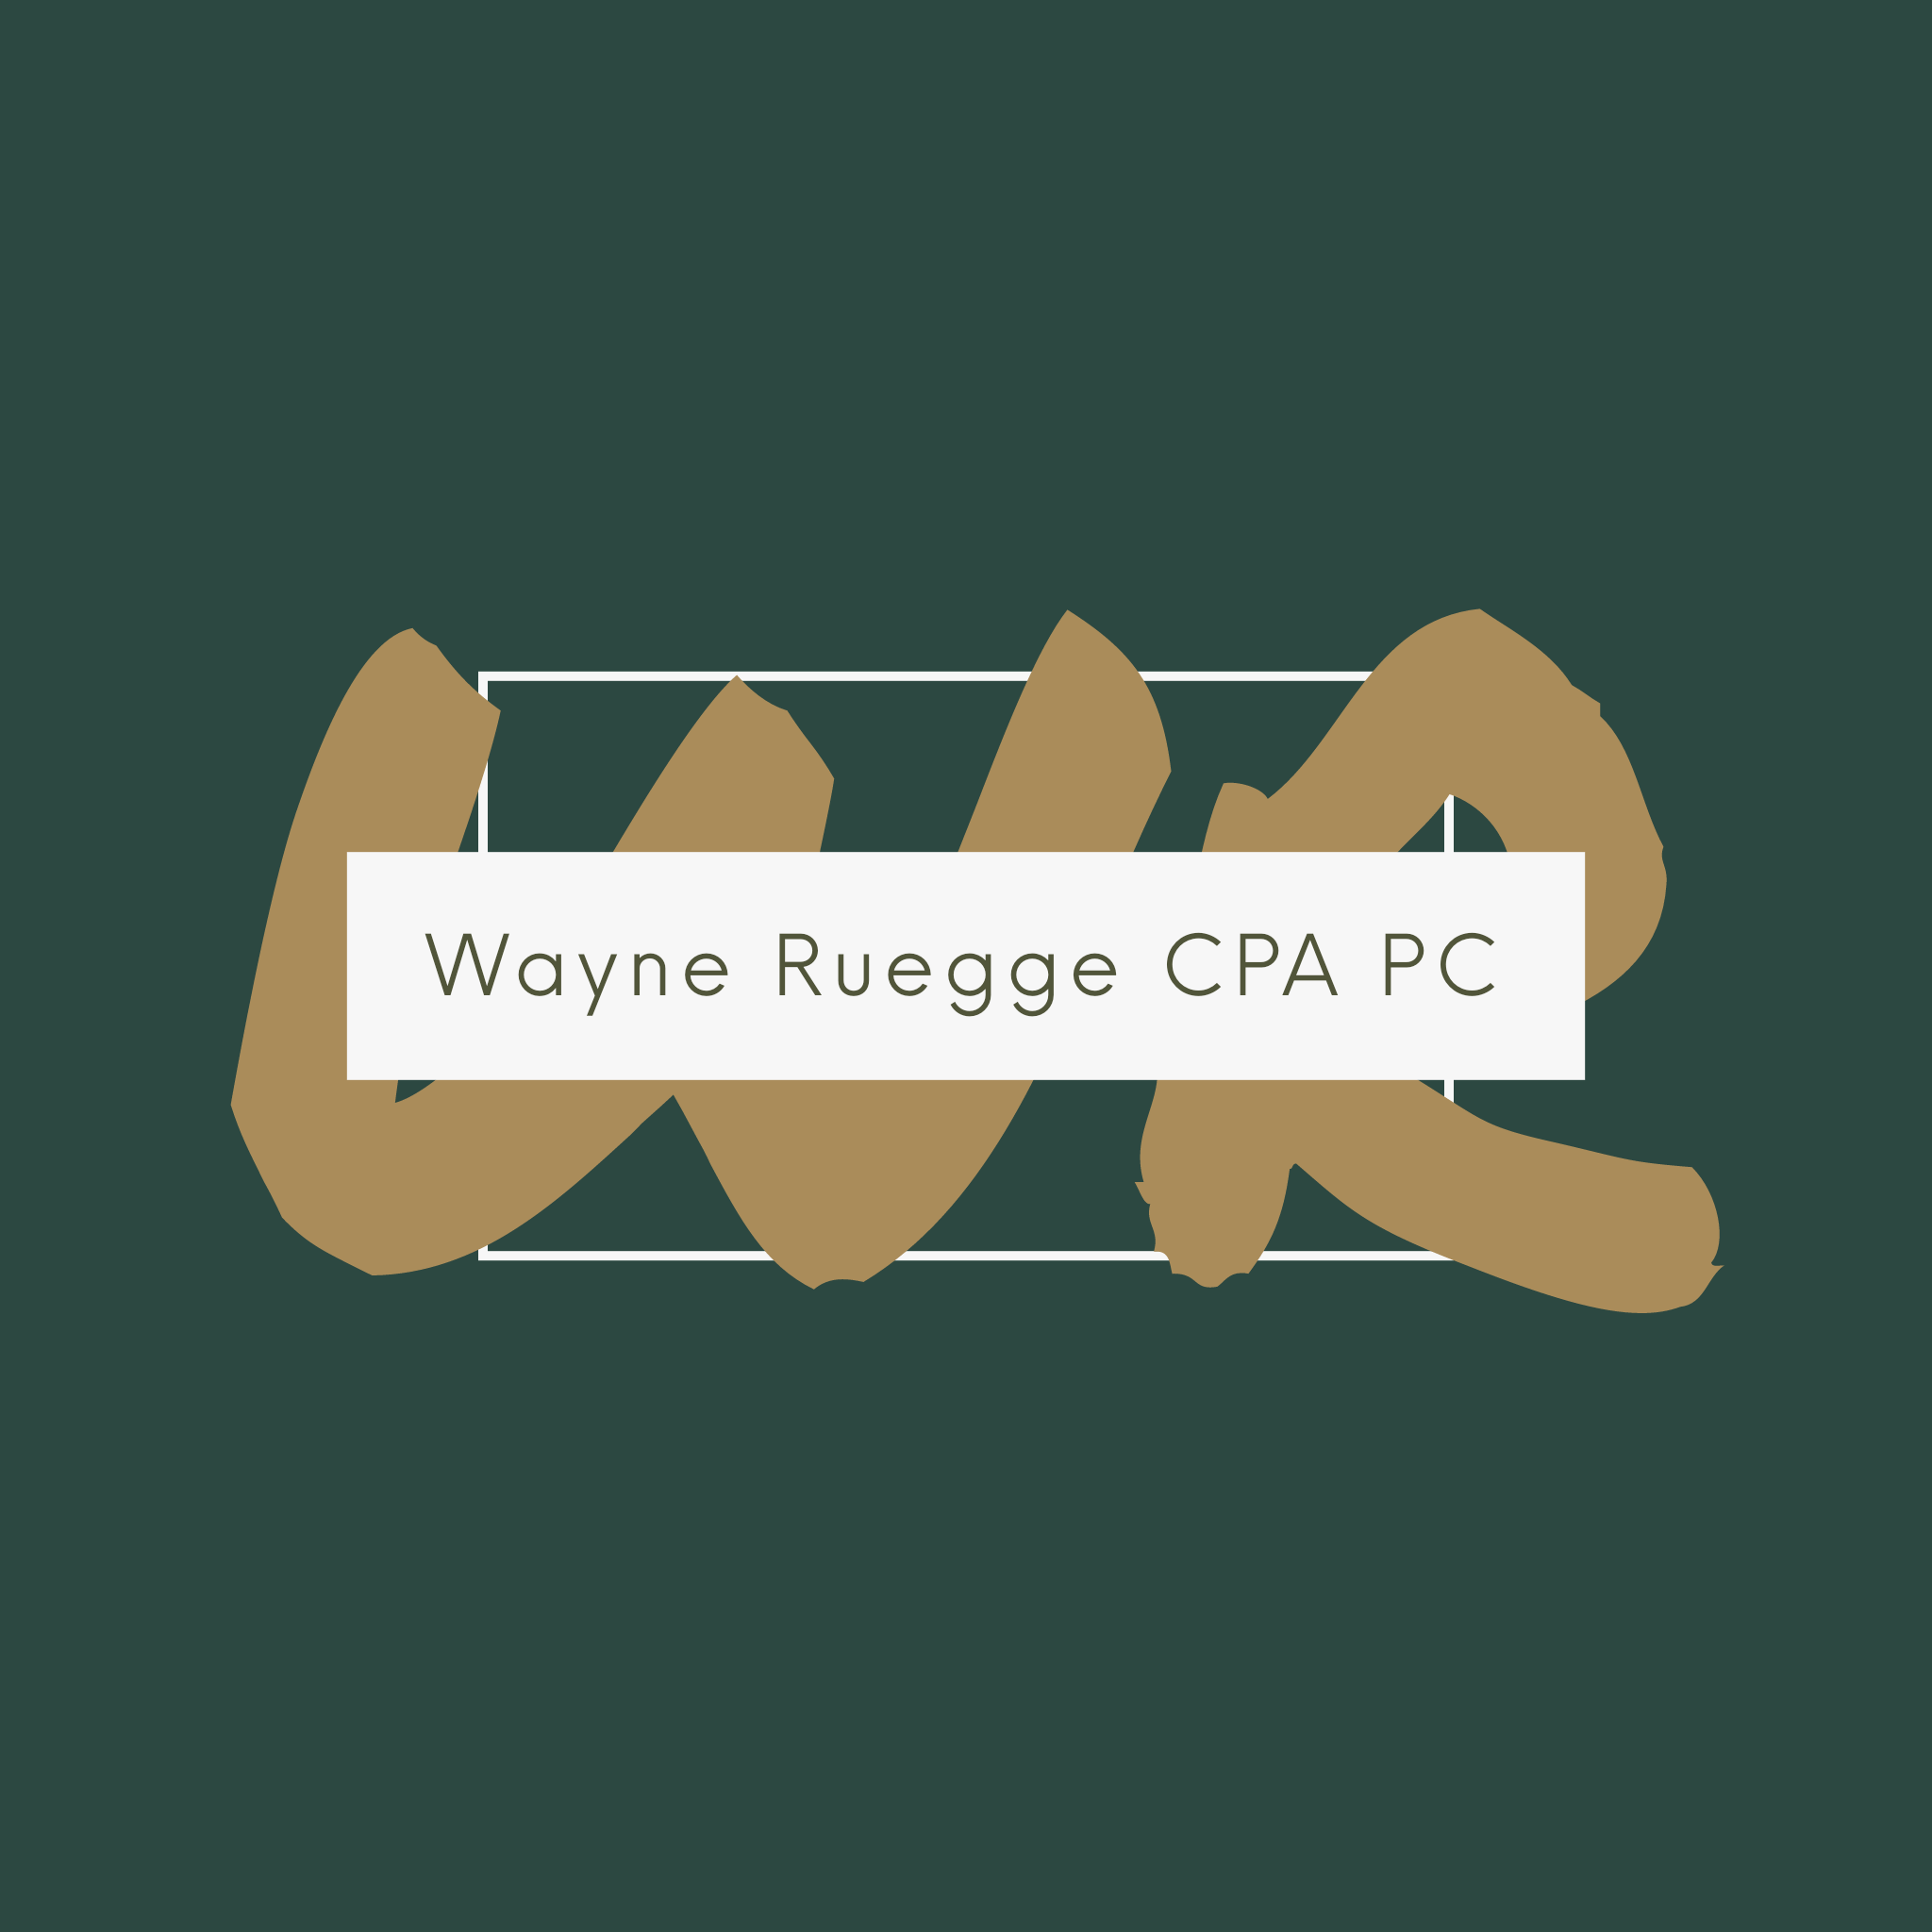 Wayne Ruegge CPA